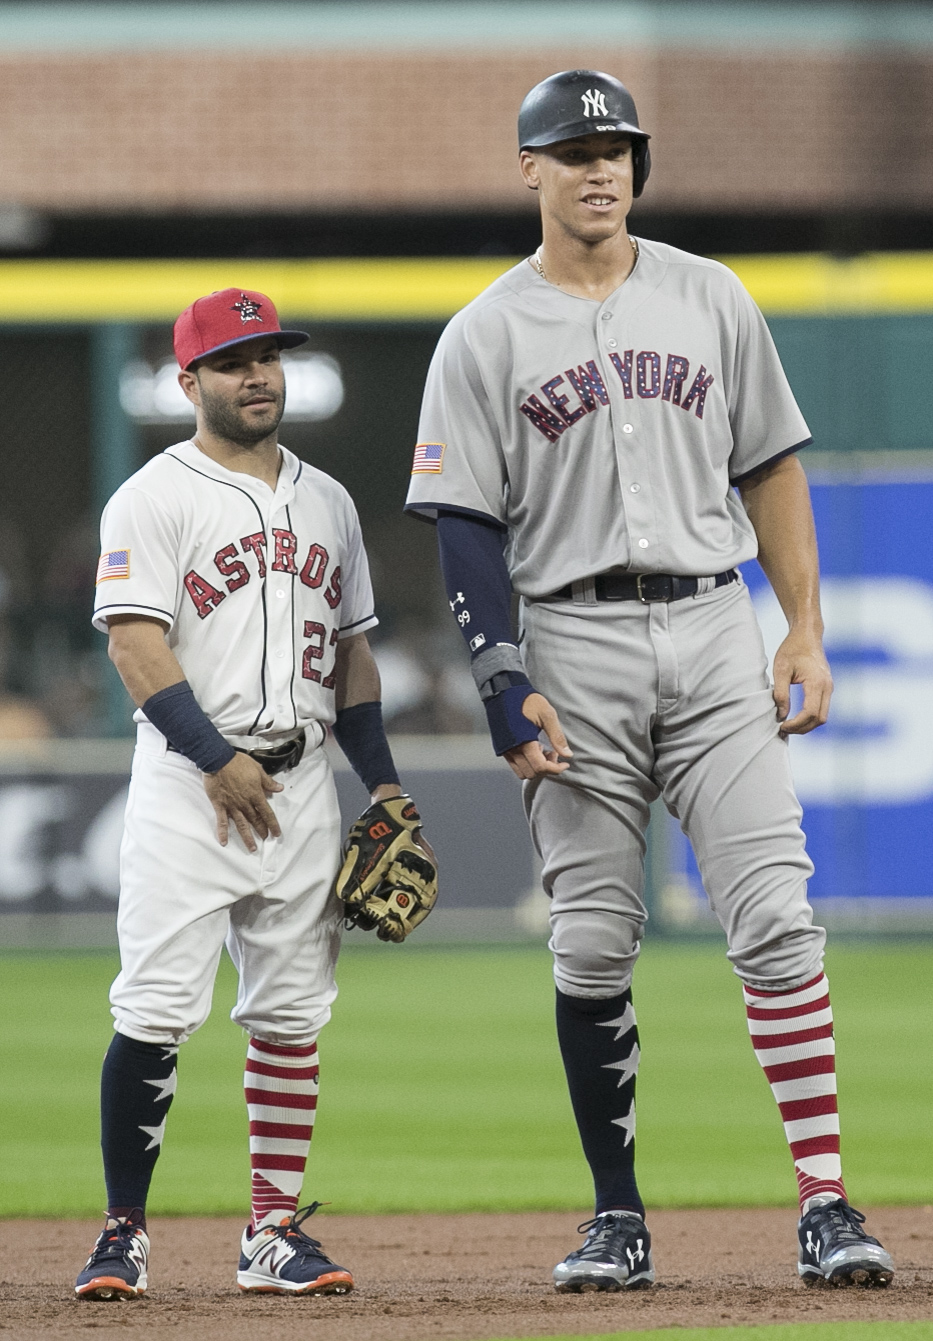 Jose Altuve, Astros get last laugh on trolling Aaron Judge